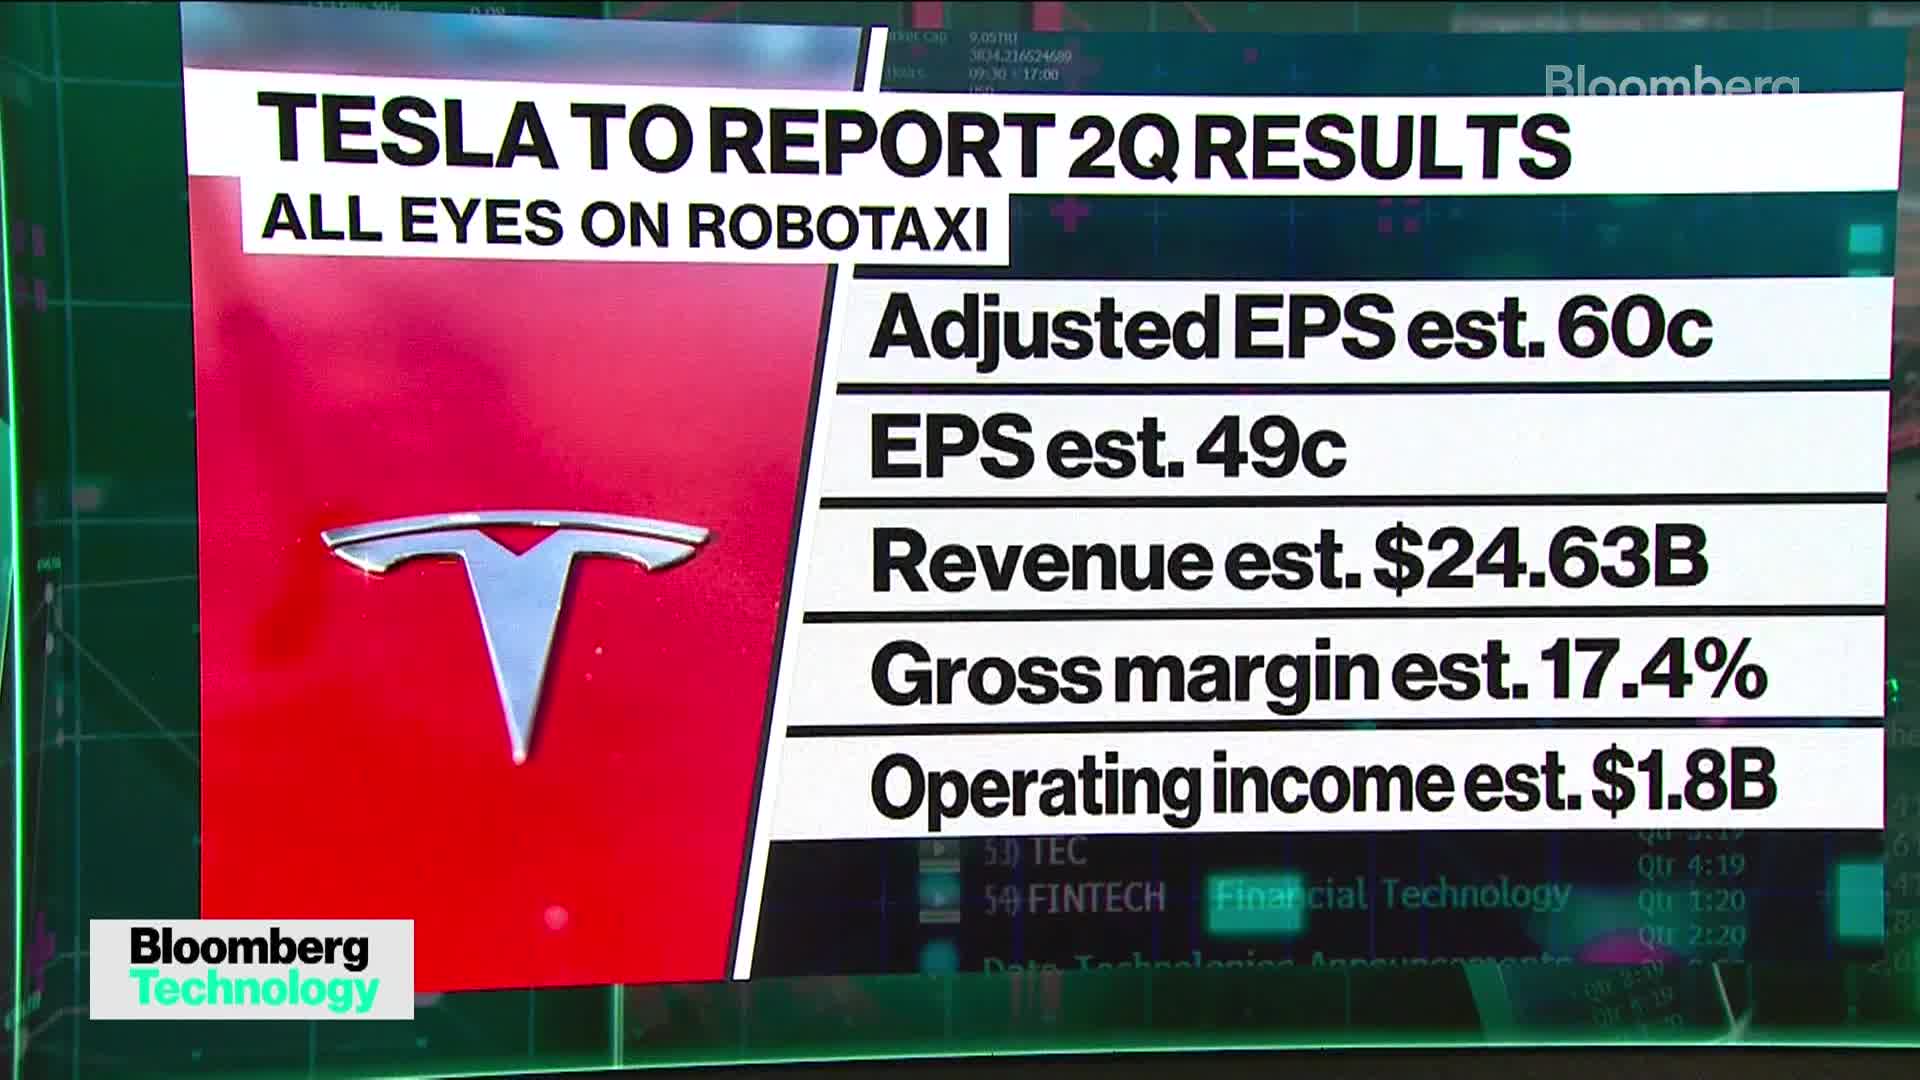 Tesla revives $386 billion with focus on AI